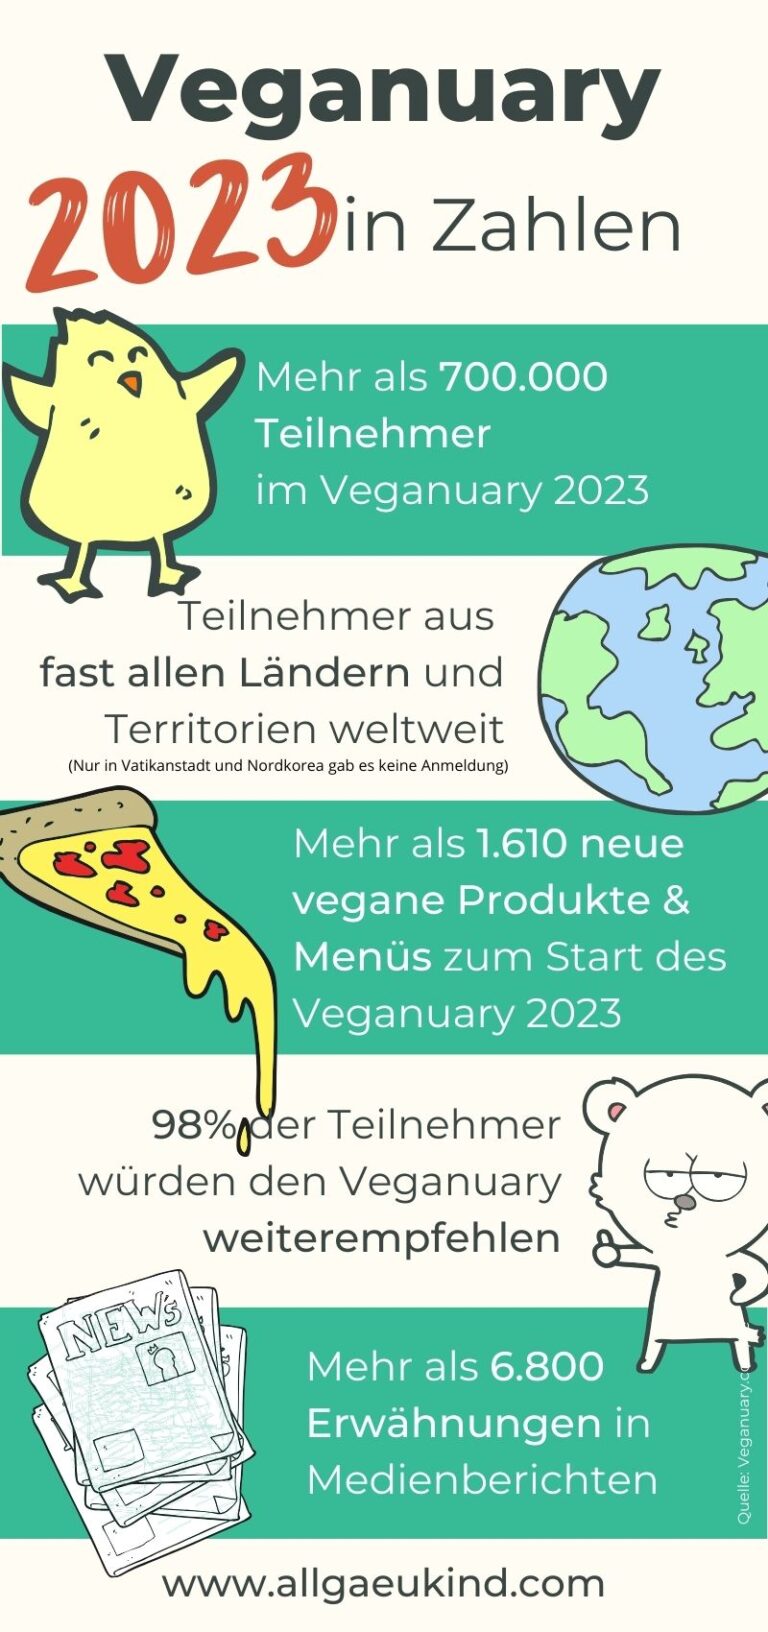 Veganuary 2023 in Zahlen Infografik